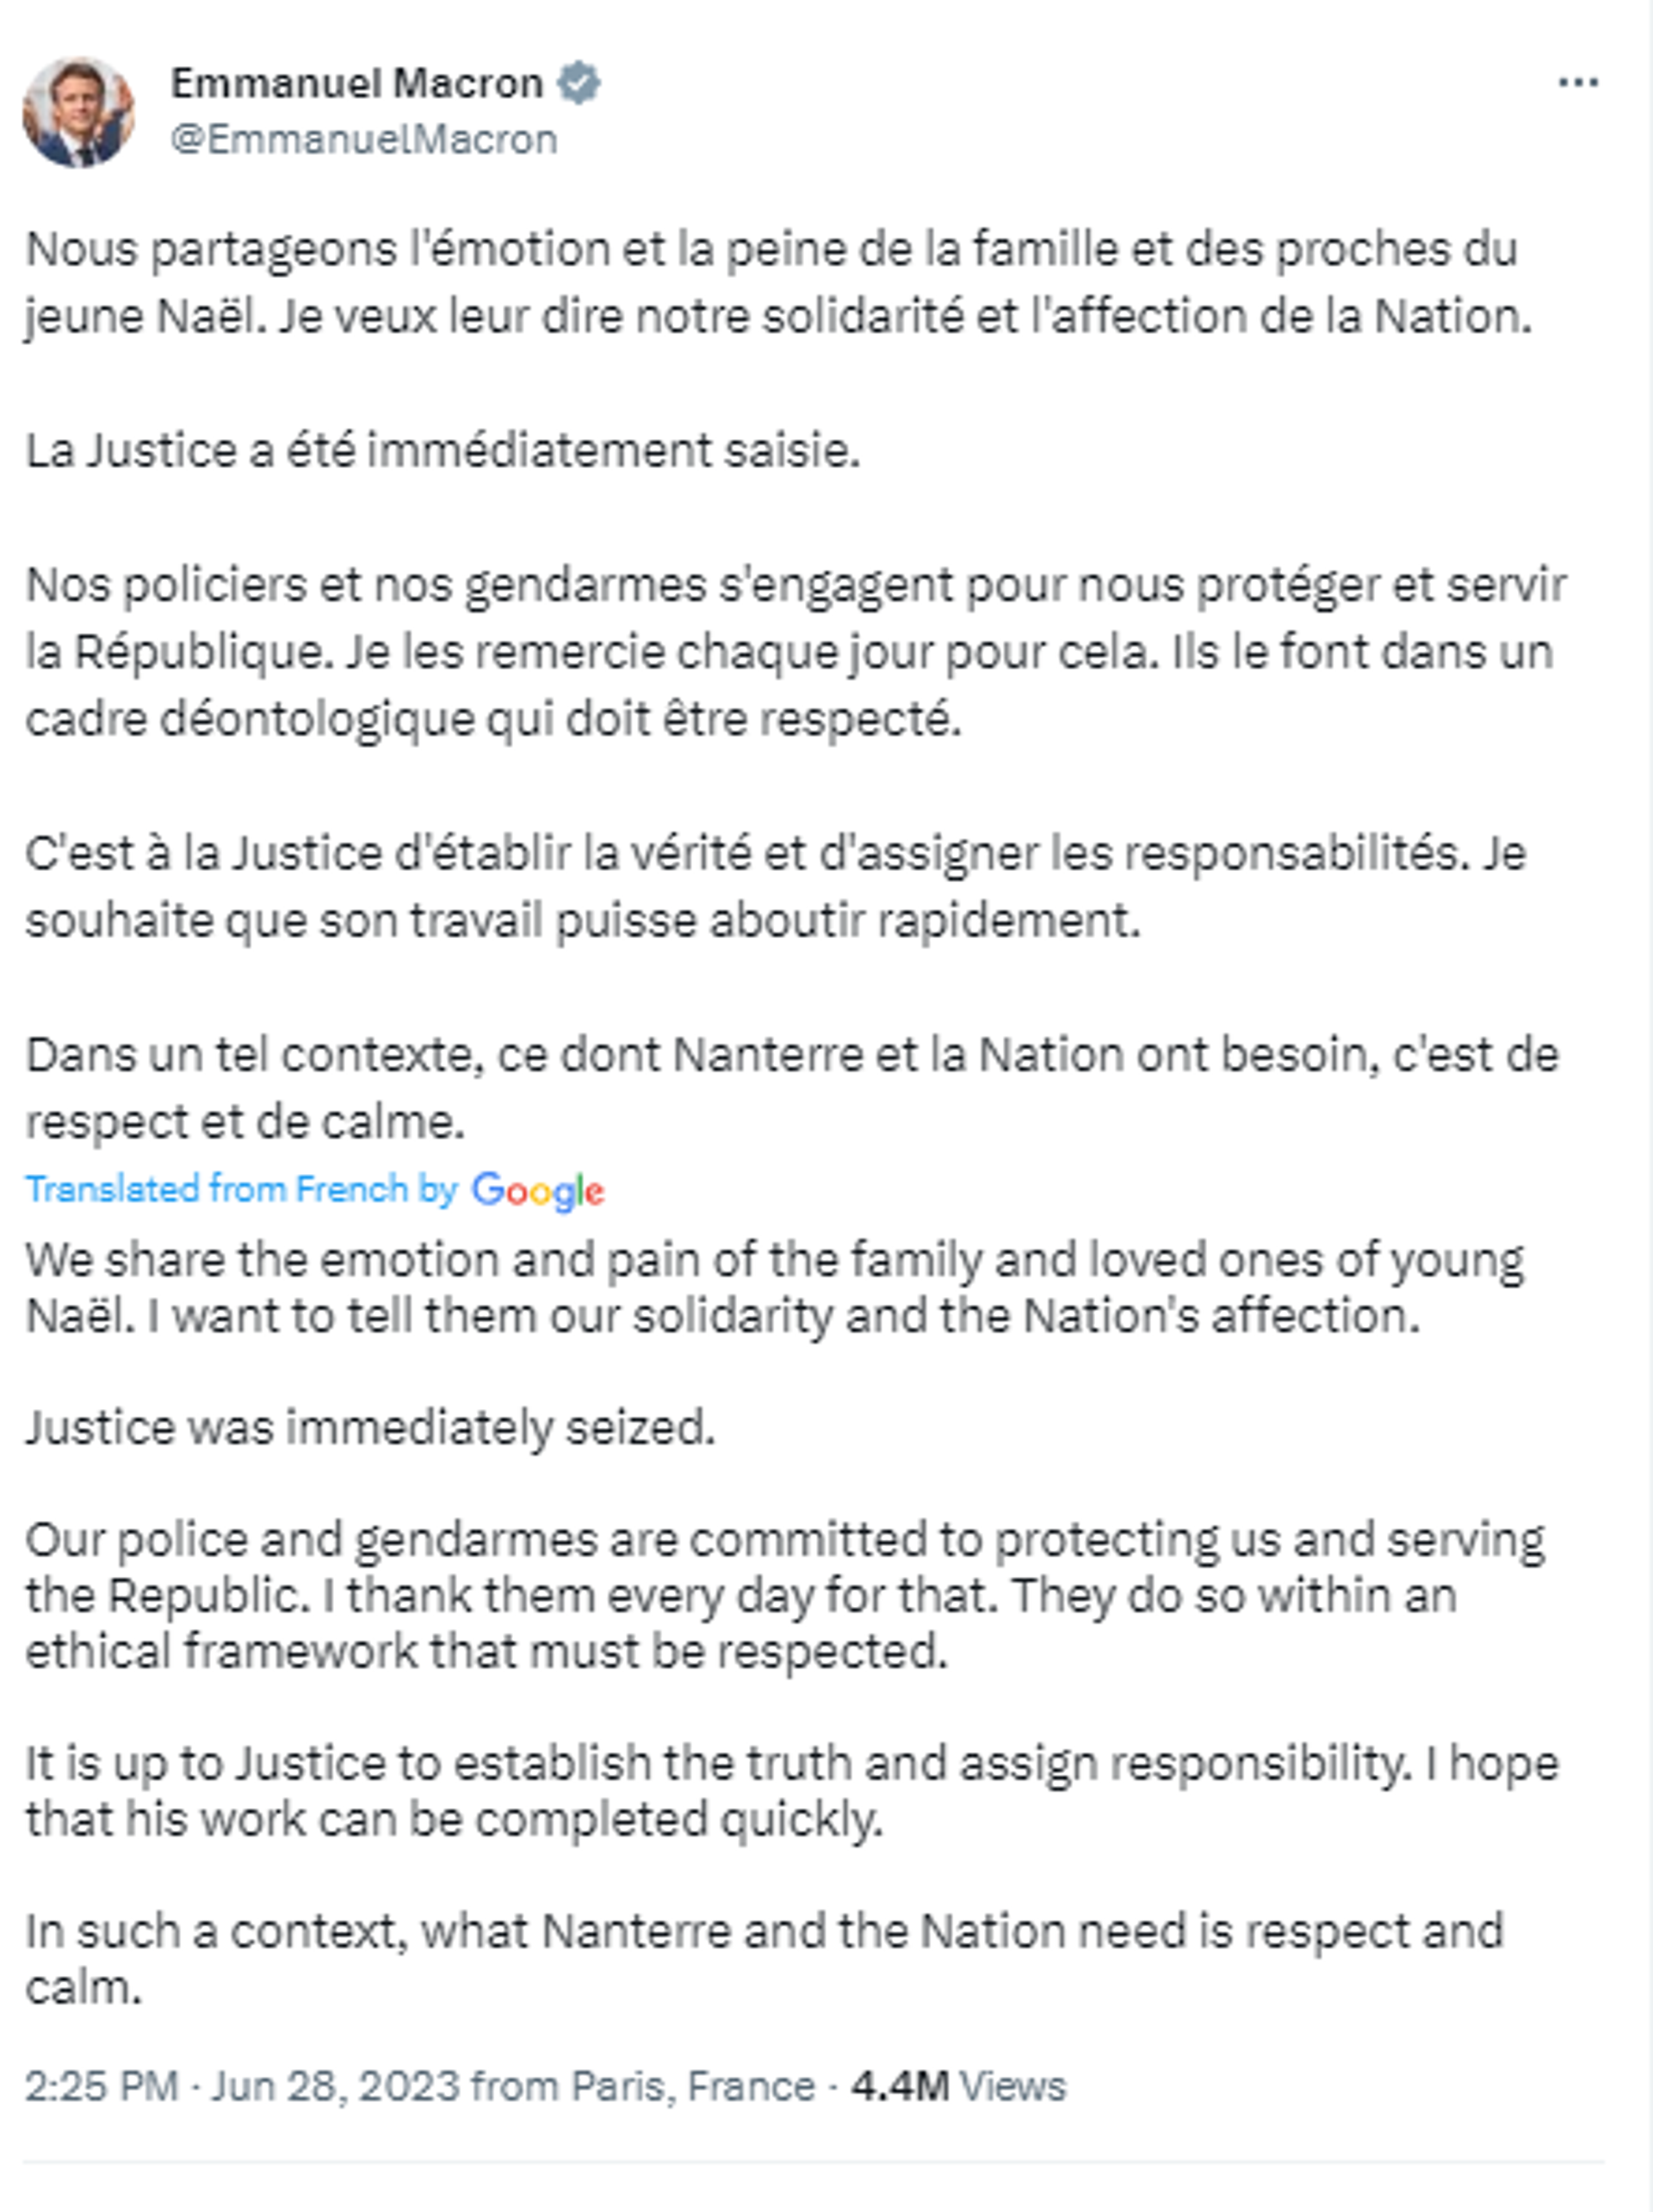 Screenshot of Twitter post by French President Emmanuel Macron. - Sputnik International, 1920, 30.06.2023